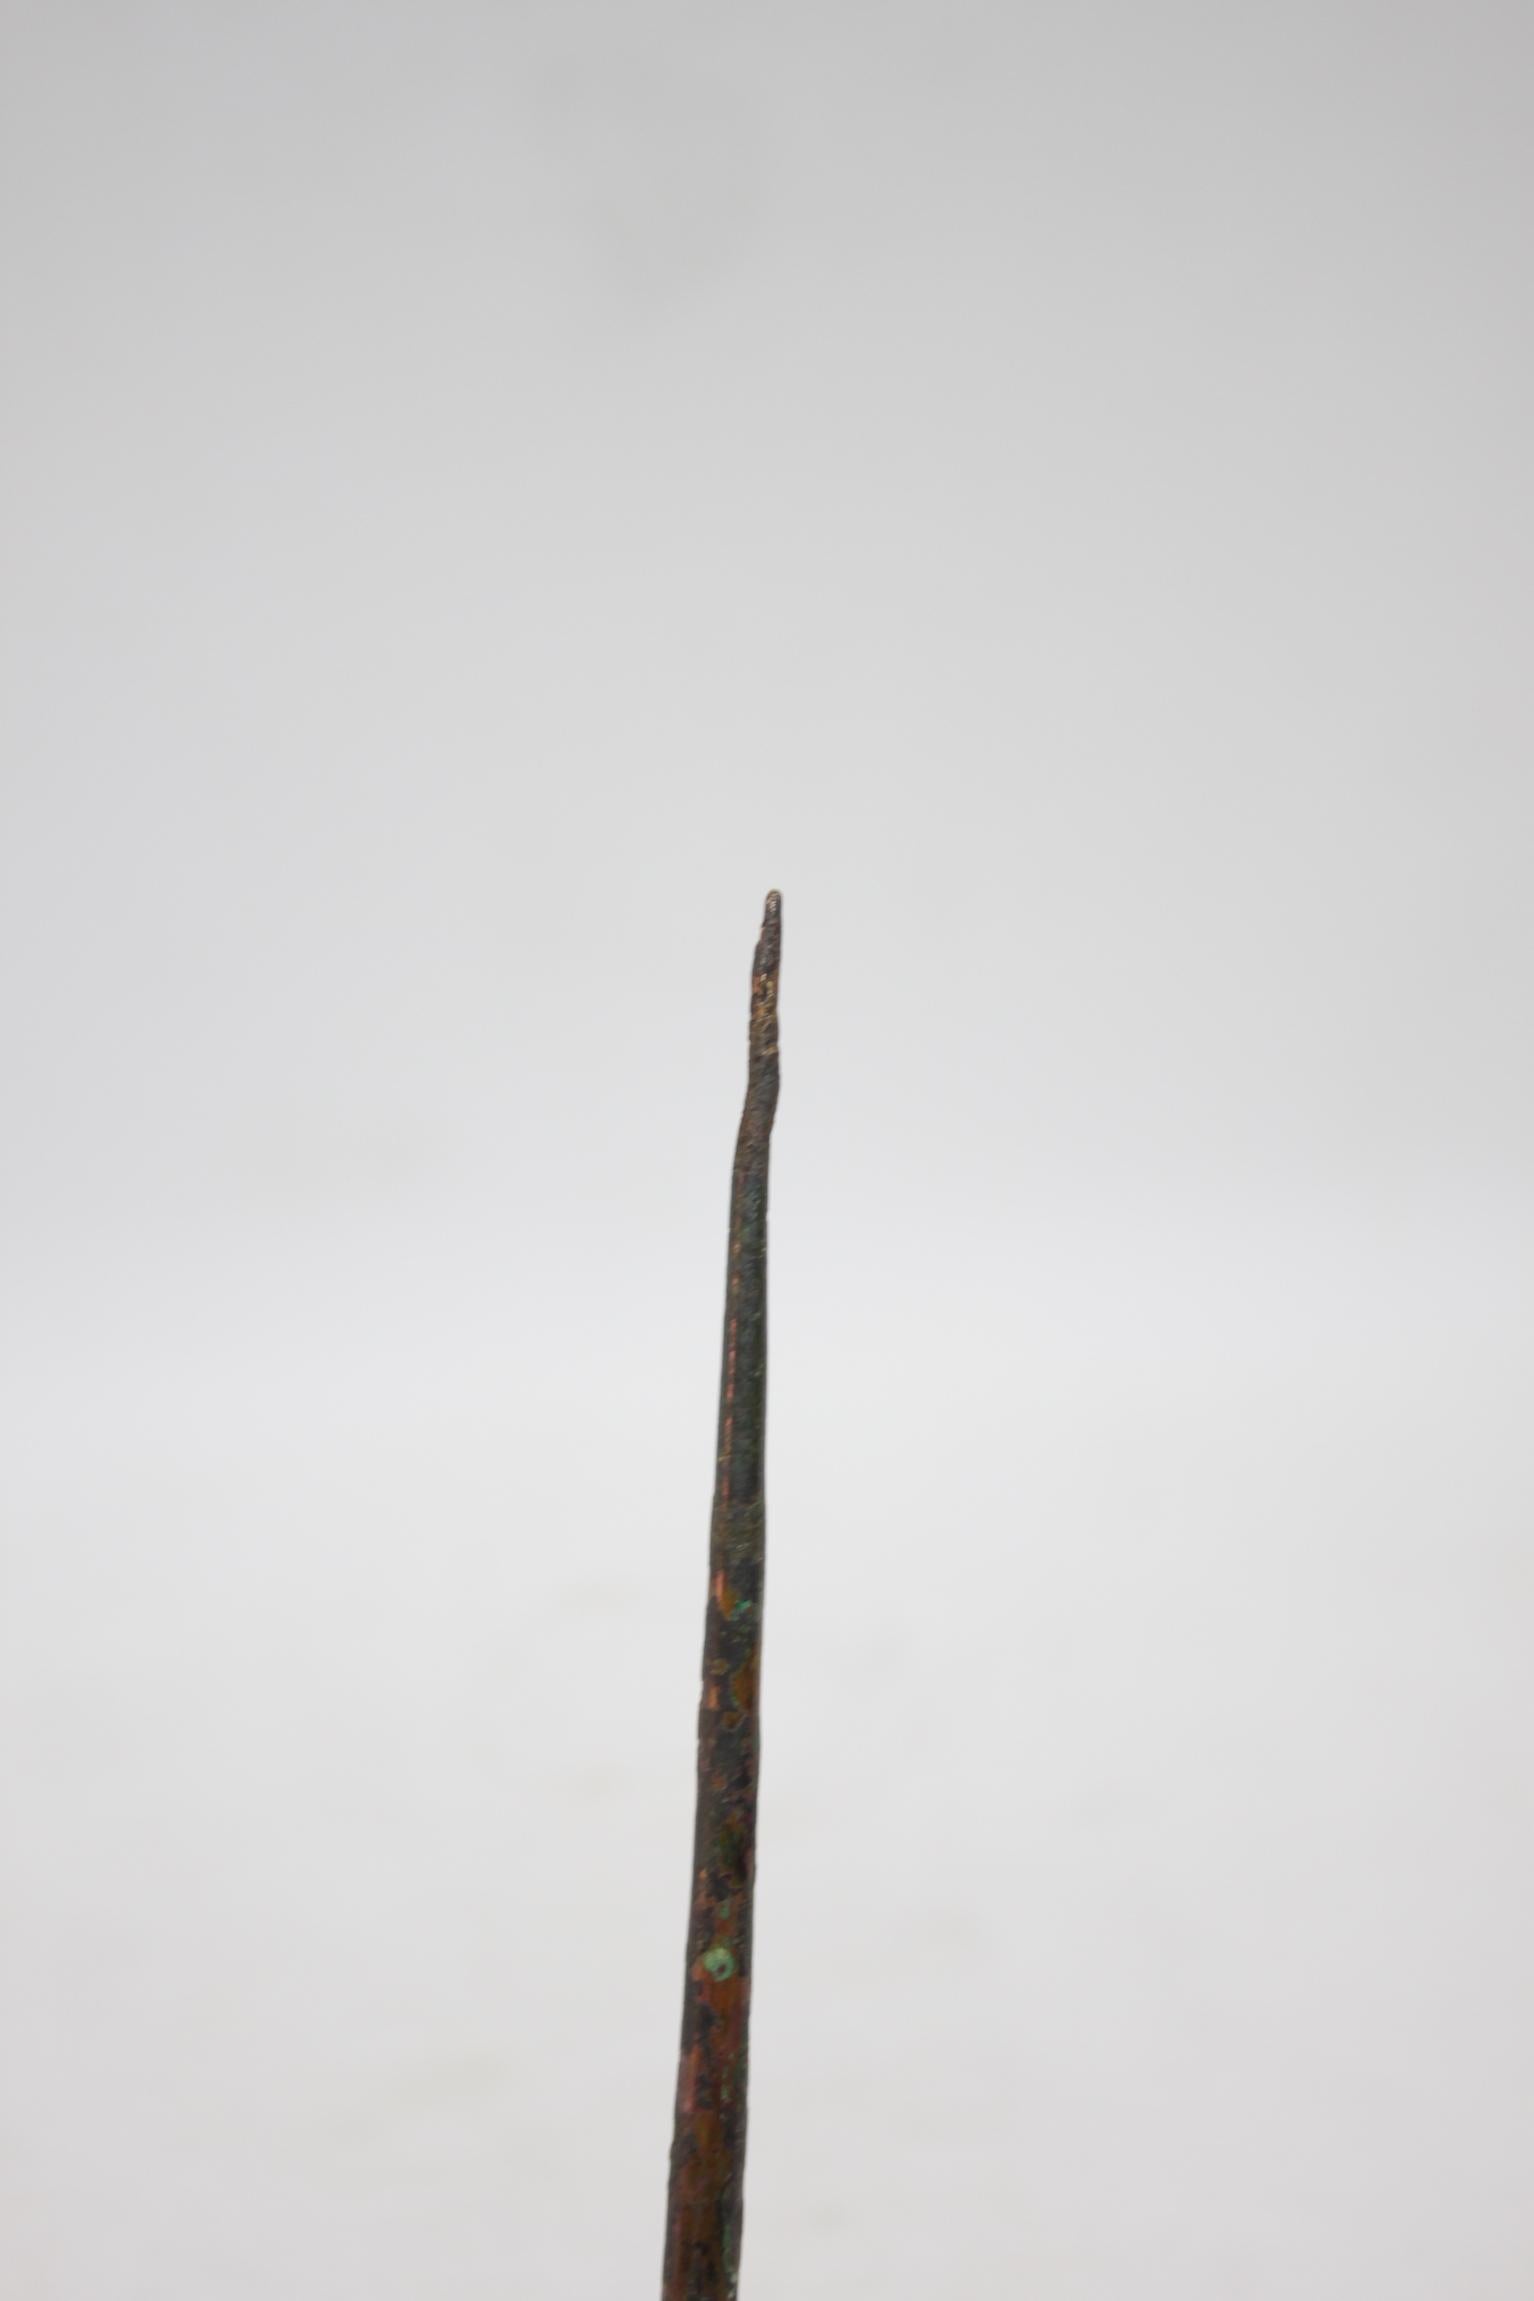 Armenian Hair Pin from 13th Century BC 1